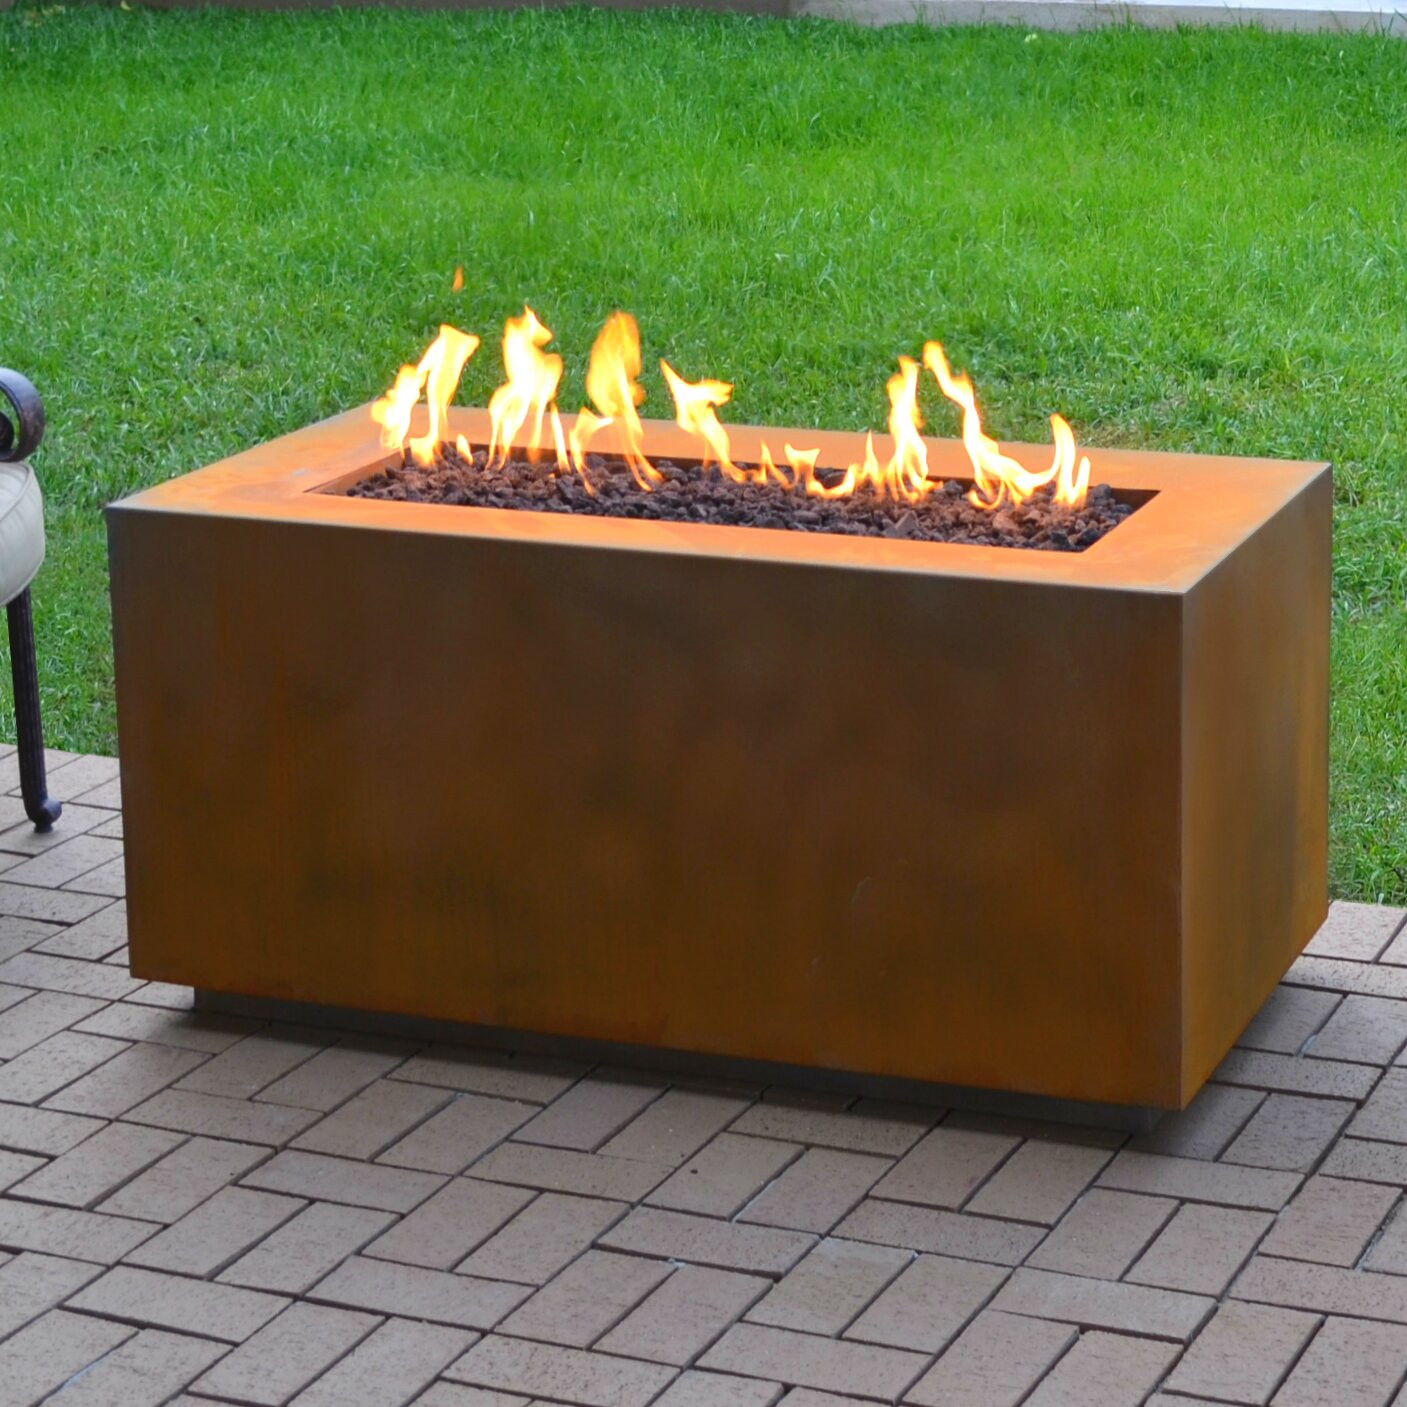 Backyard Propane Fire Pit
 The Outdoor Plus Corten Steel Propane Fire Pit Table